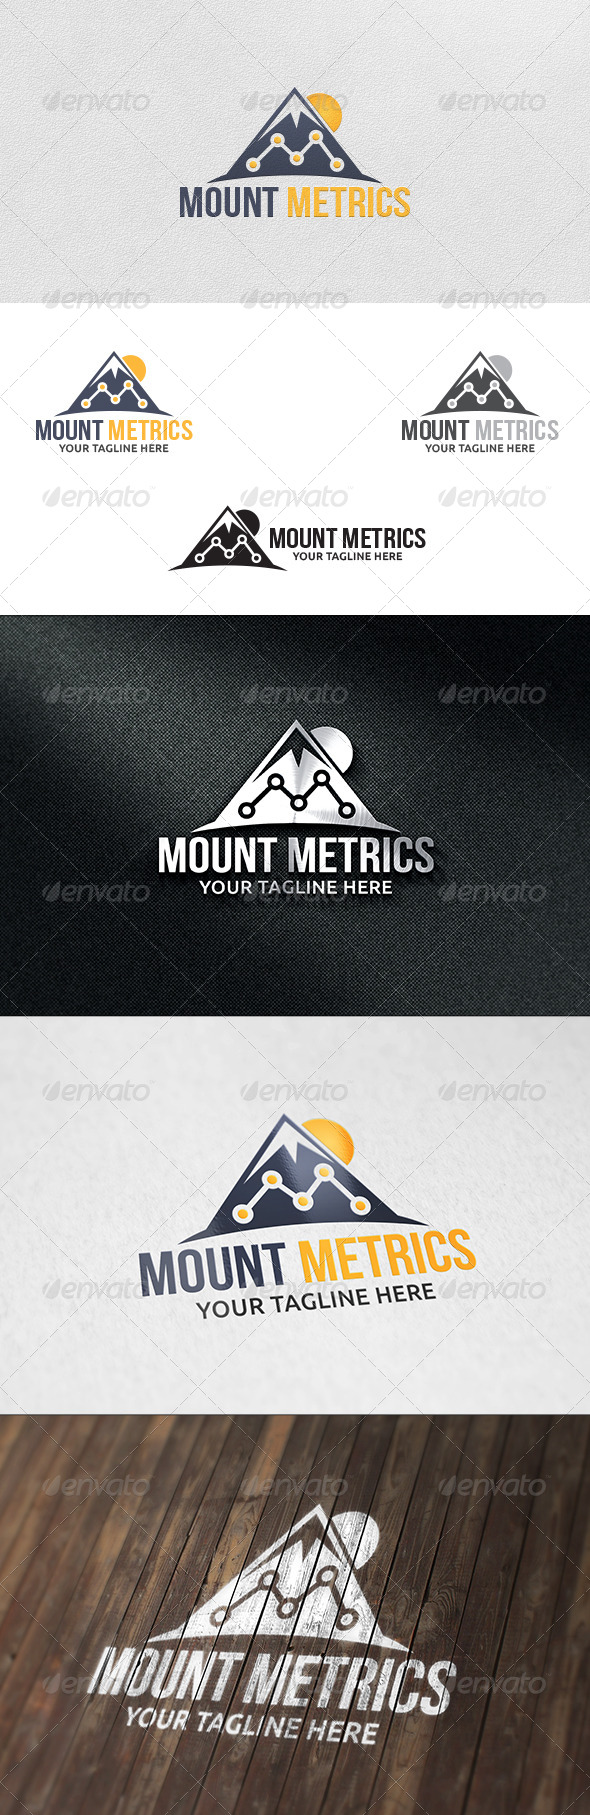 Mountain Metrics - Logo Template